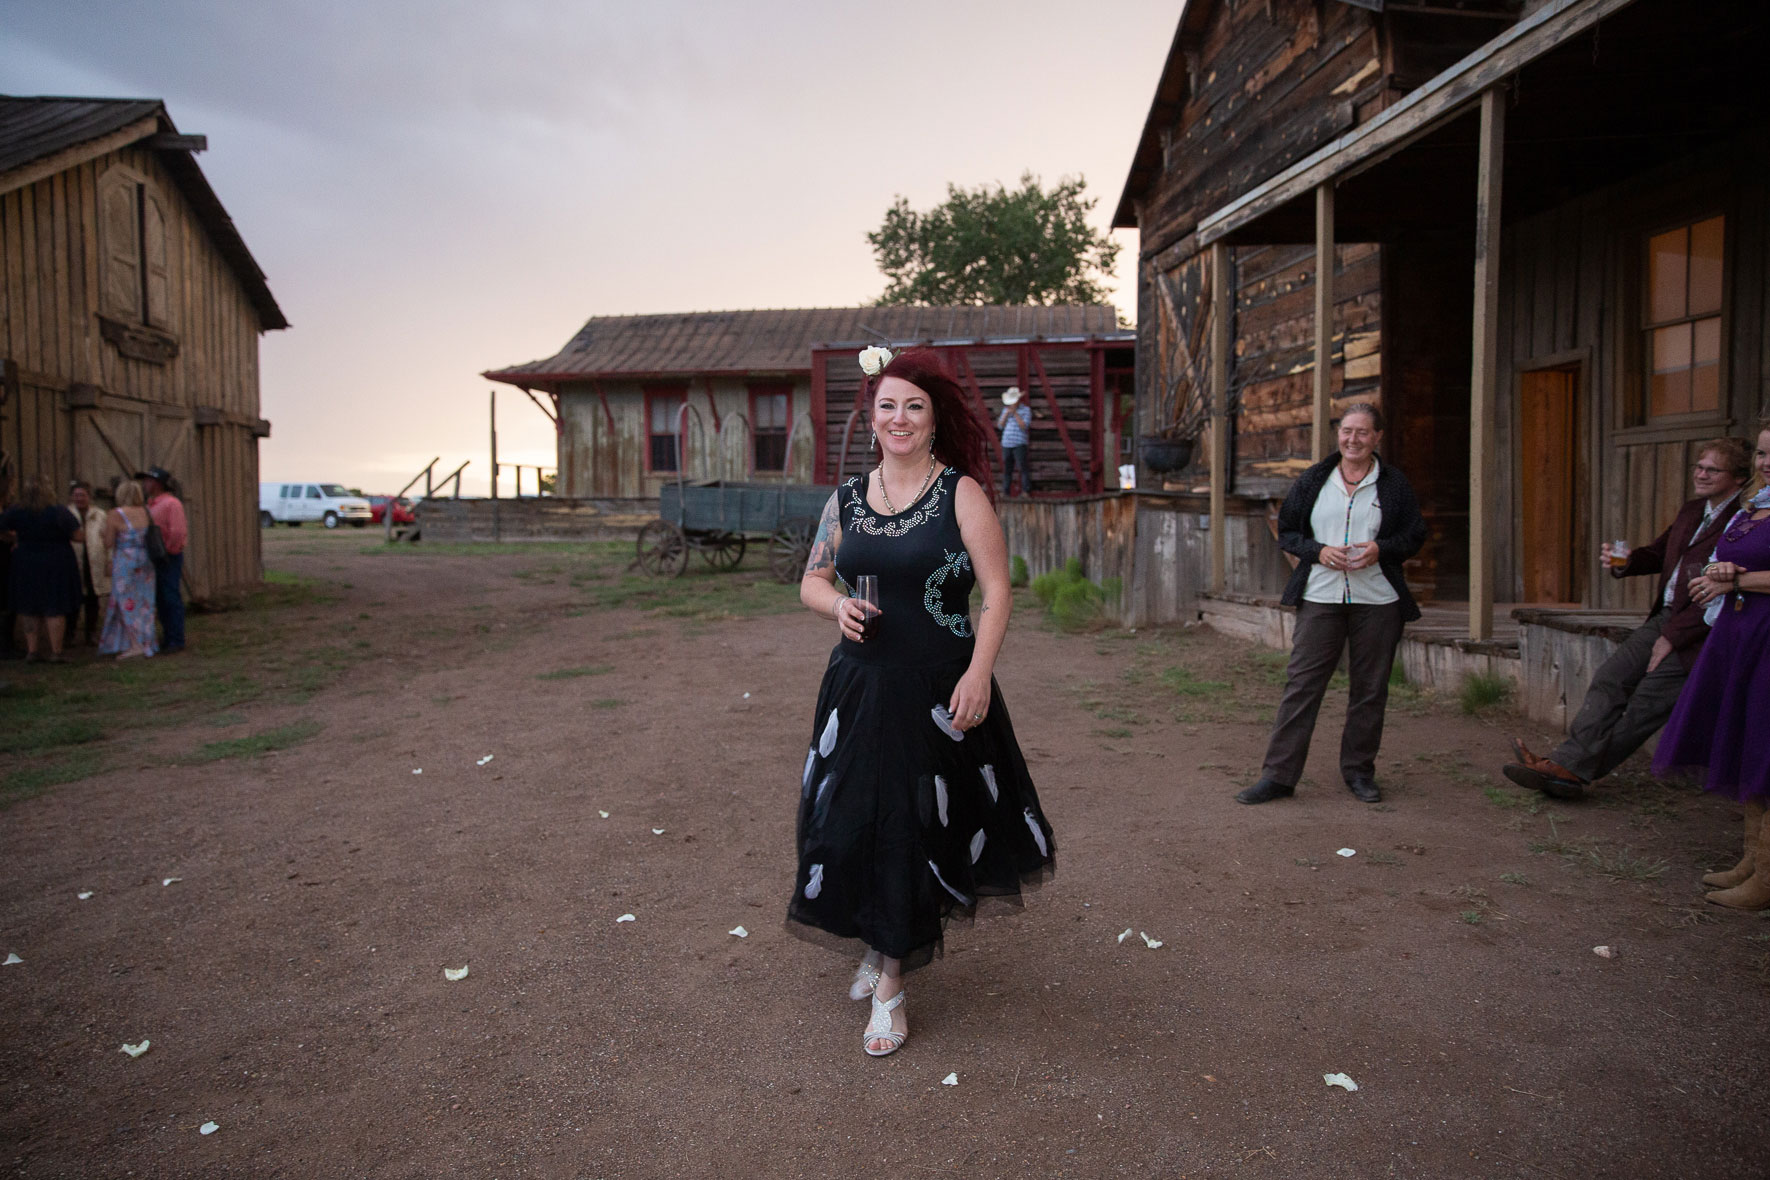 Eaves Movie Ranch Wedding, Santa Fe, NM